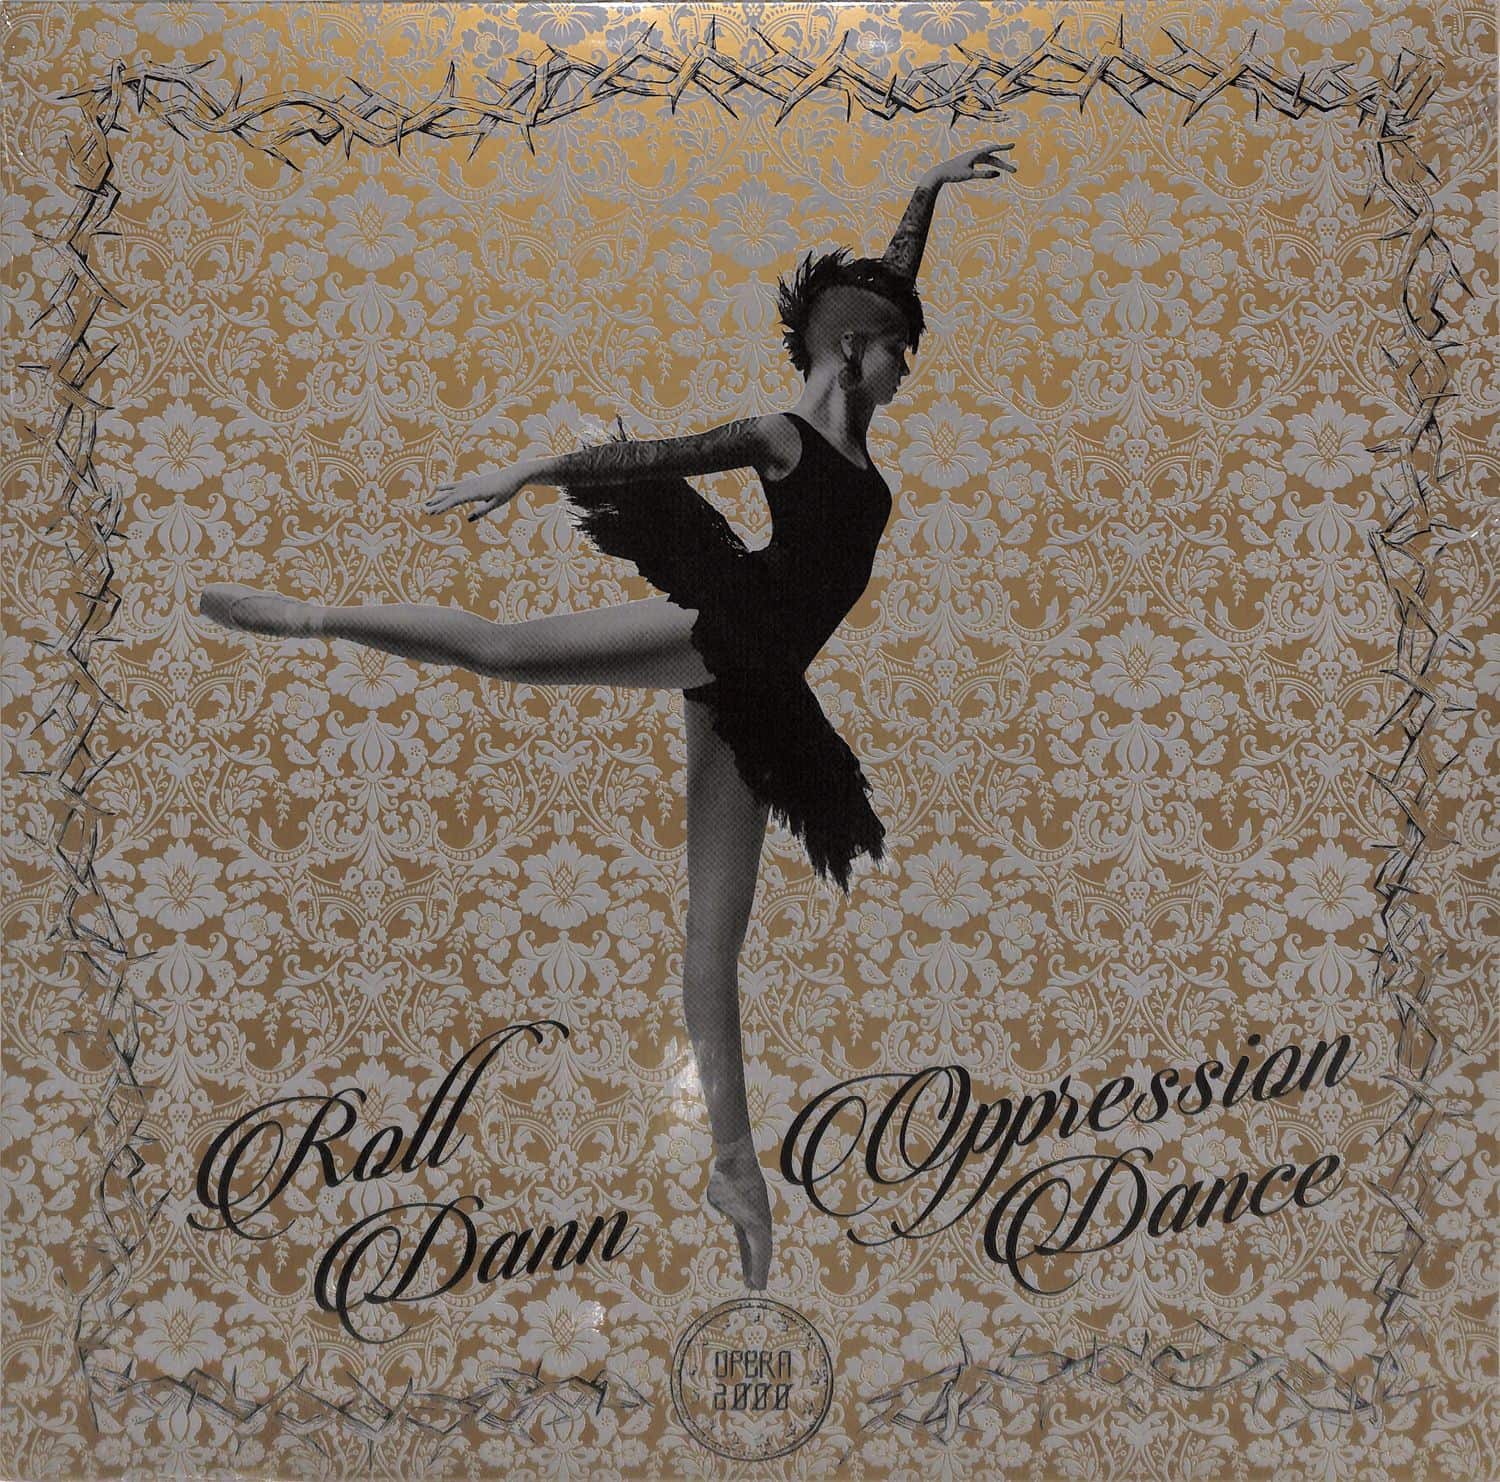 Roll Dann - OPRESSION DANCE EP